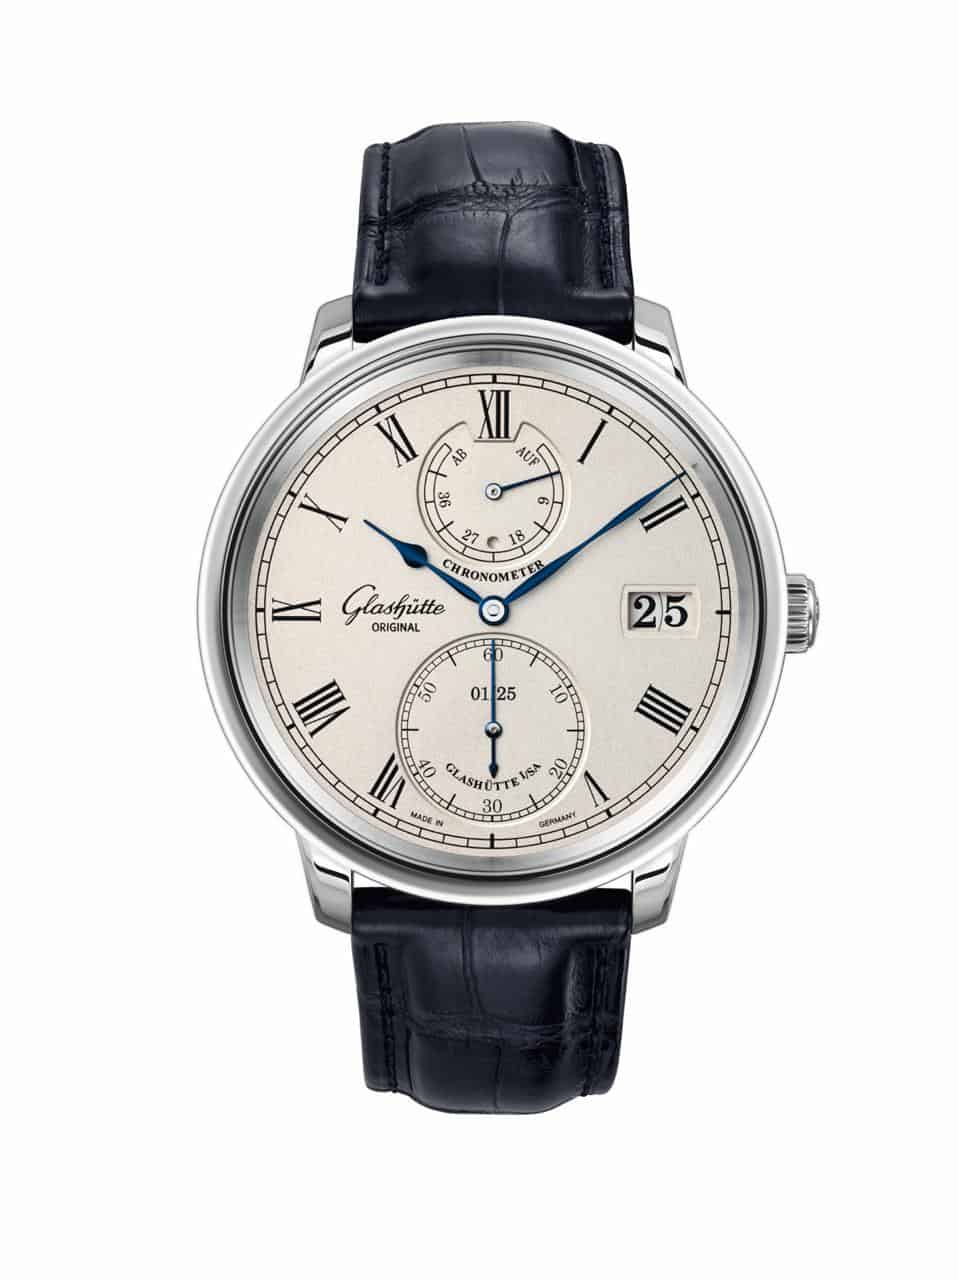 Jam tangan Senator Chronometer dari Glashütte